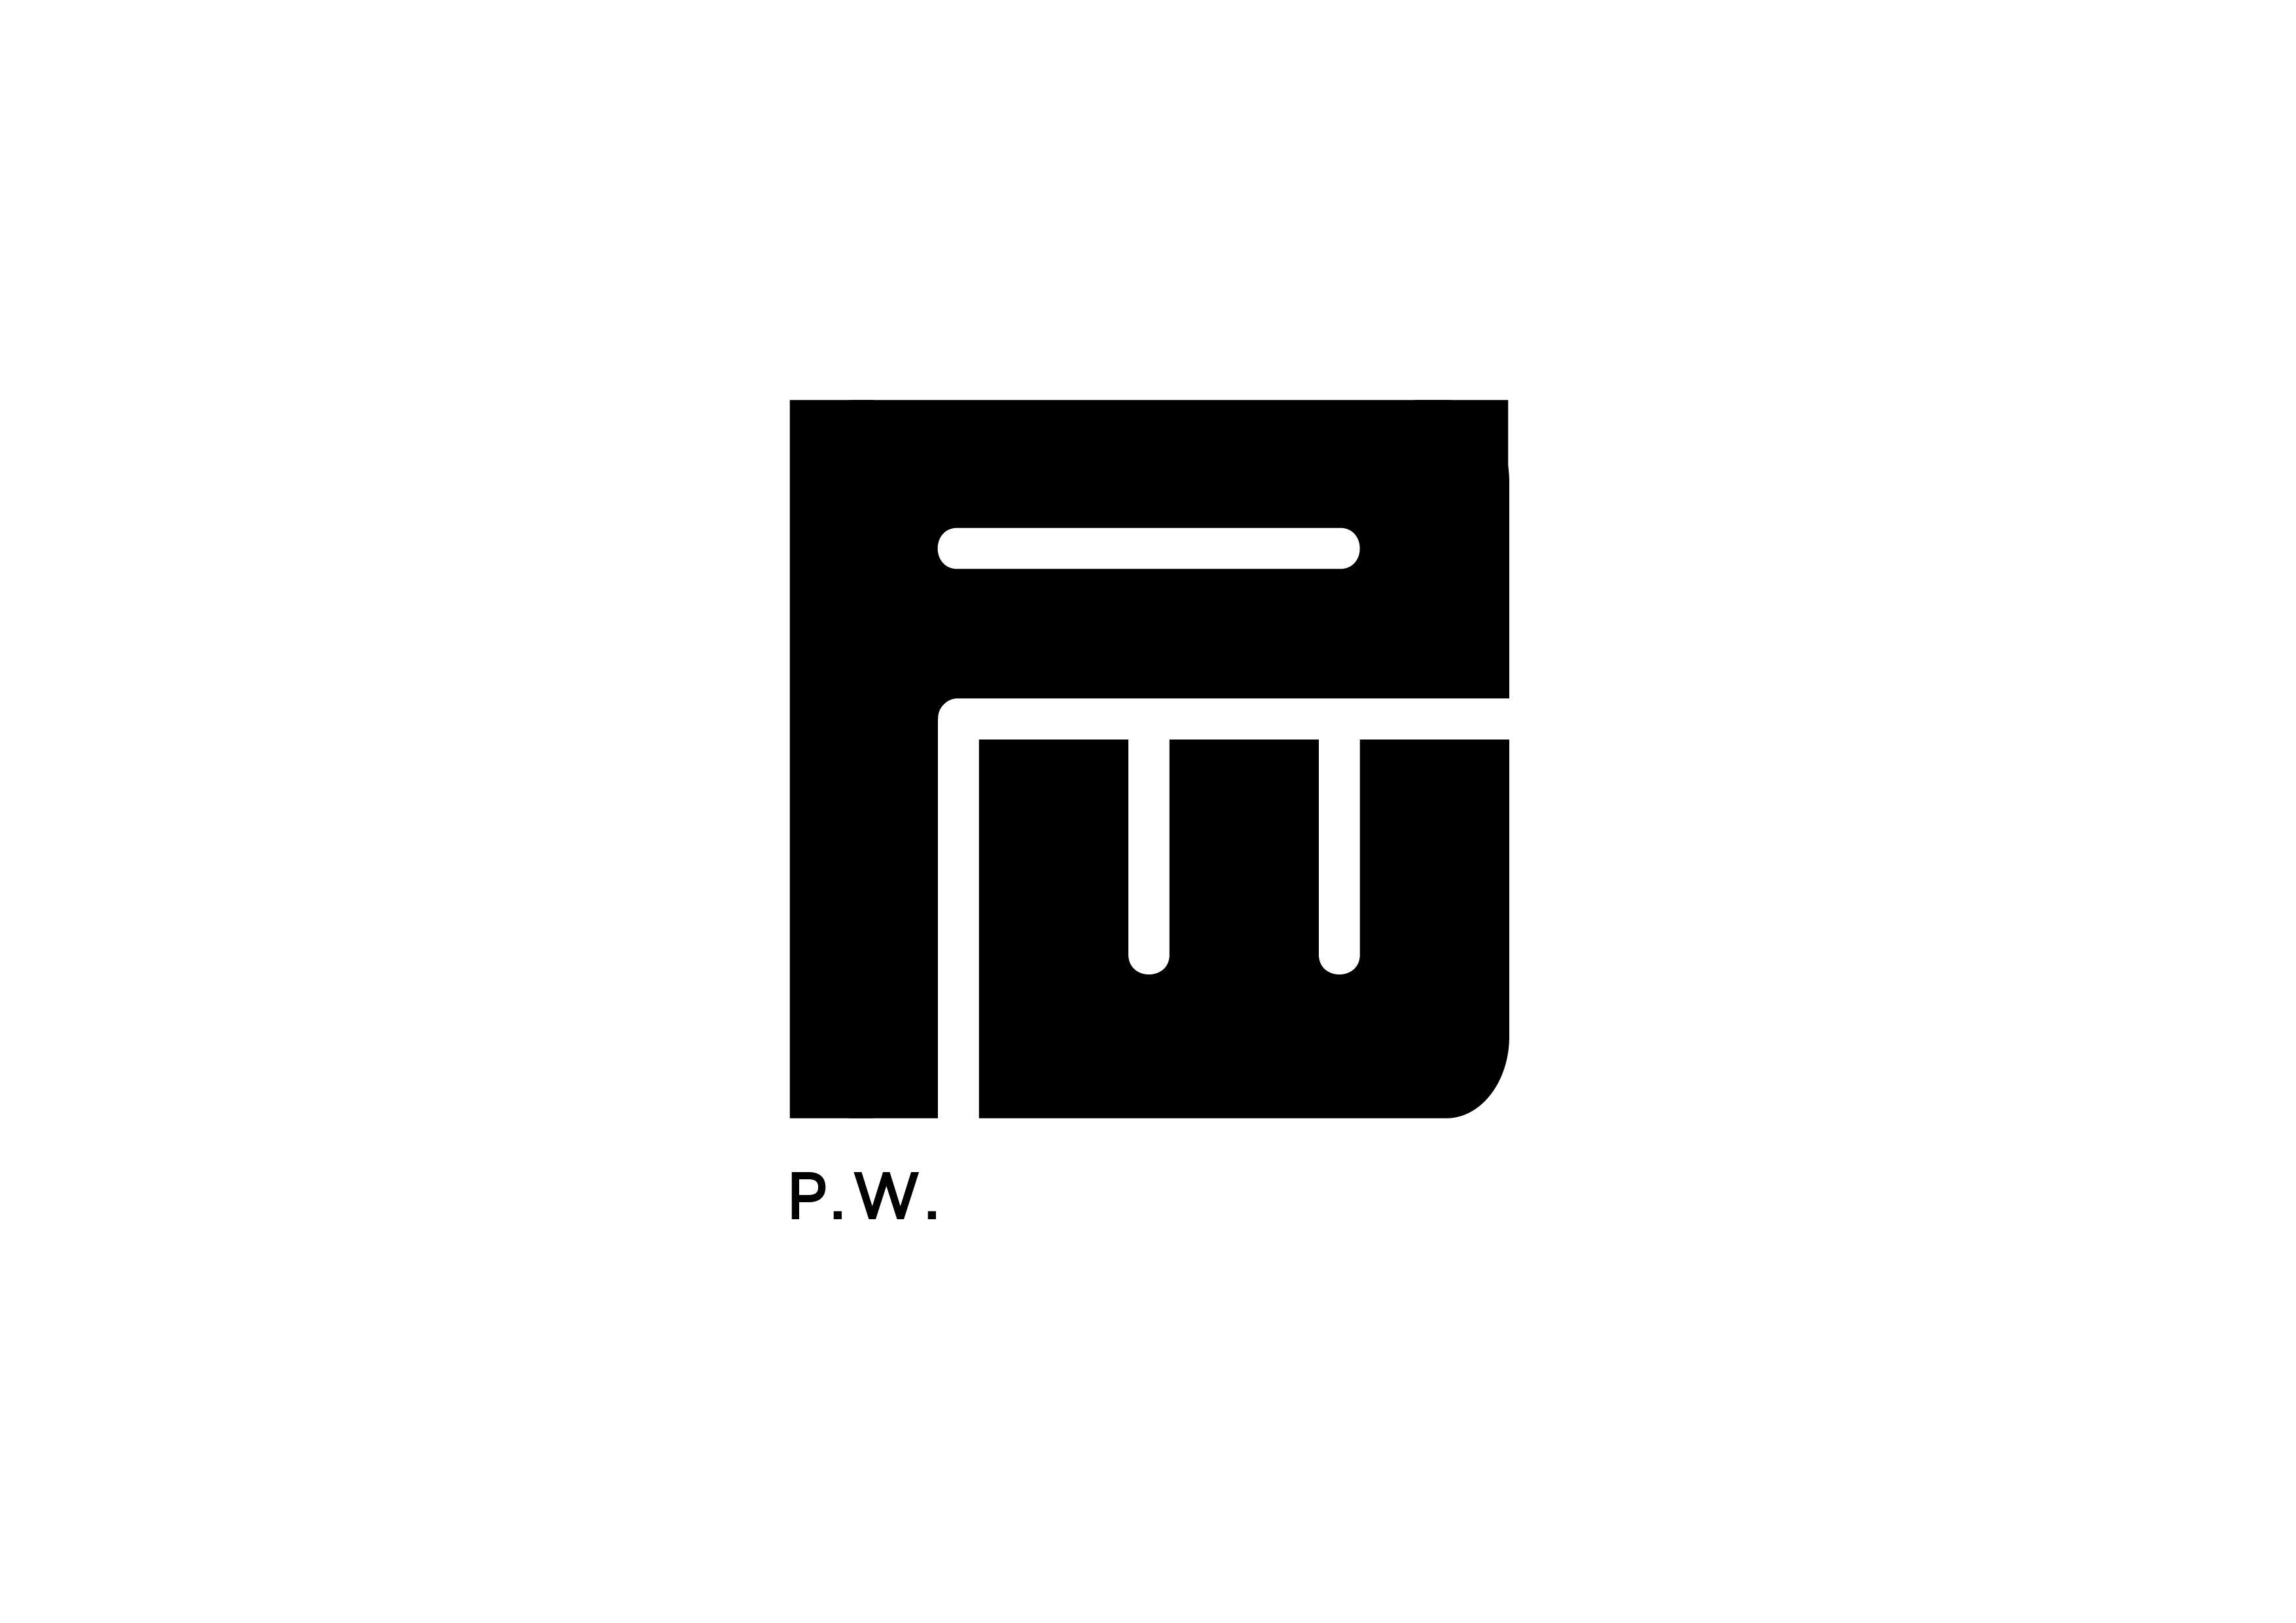 PW Logo - P.W. LOGO | LOGOs | Pinterest | Logos, Fonts and Identity